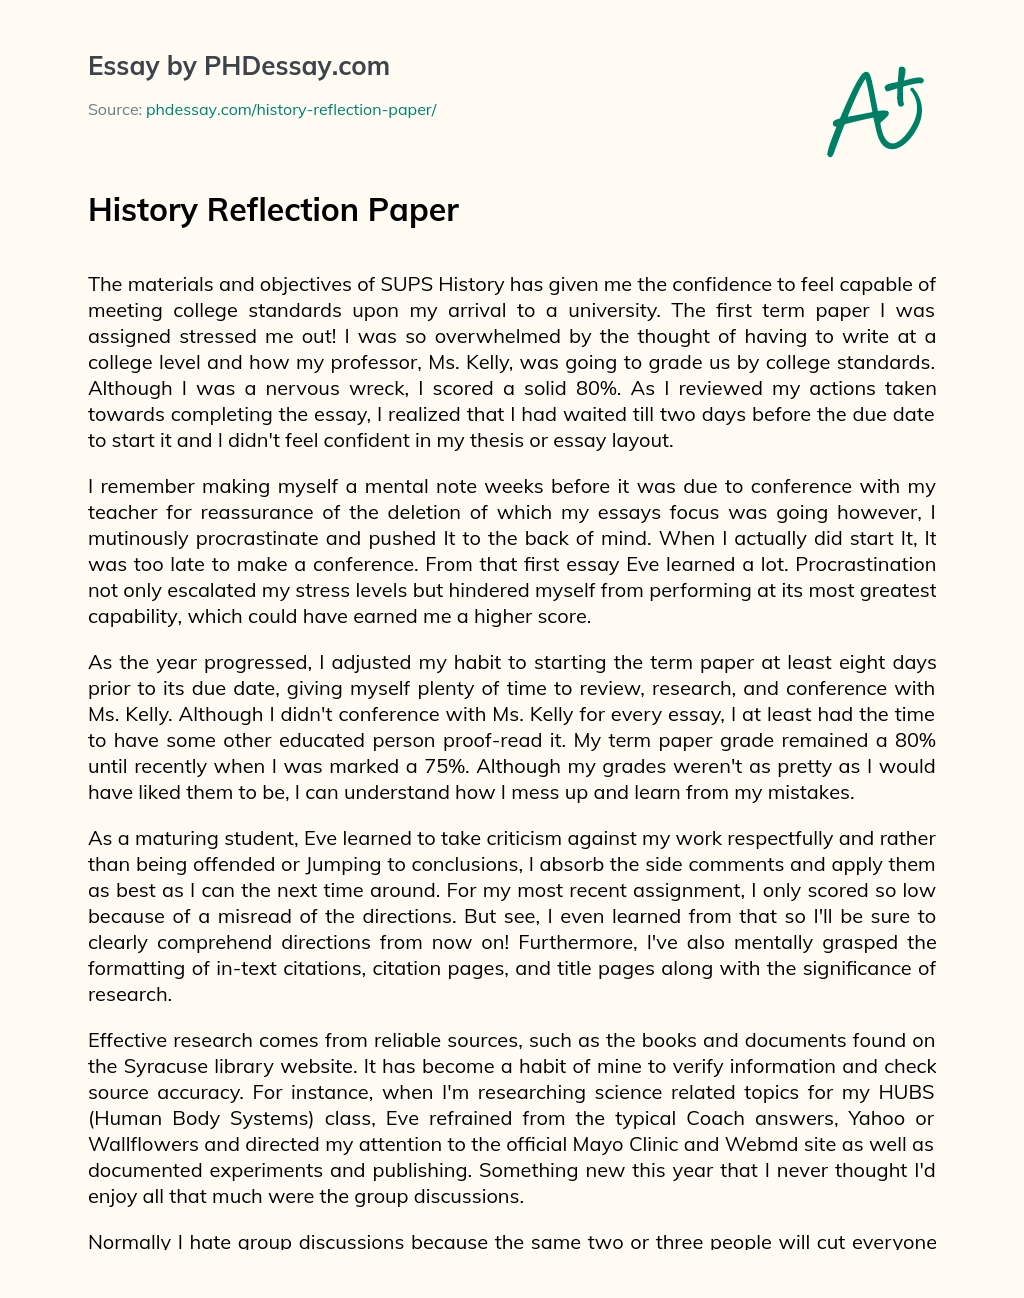 History Reflection Paper Phdessay Com